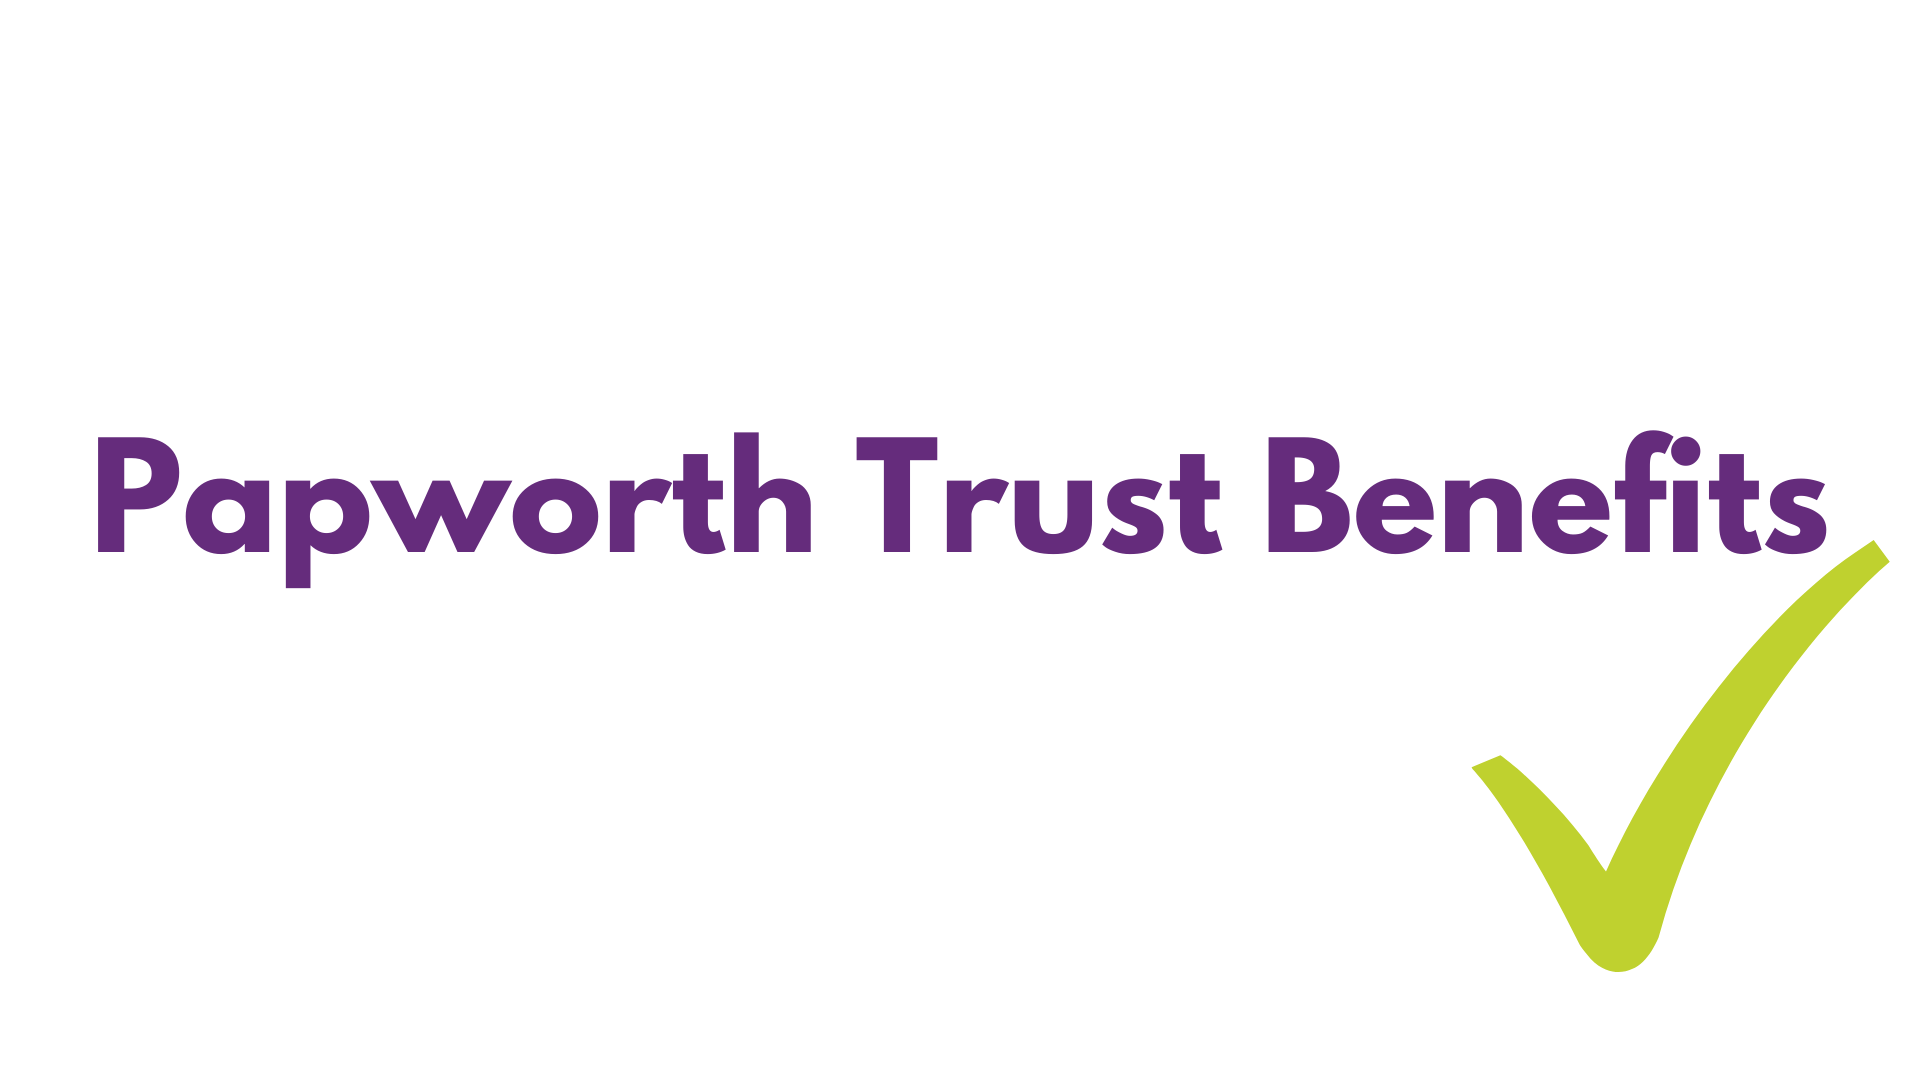 Papworth Trust benefits